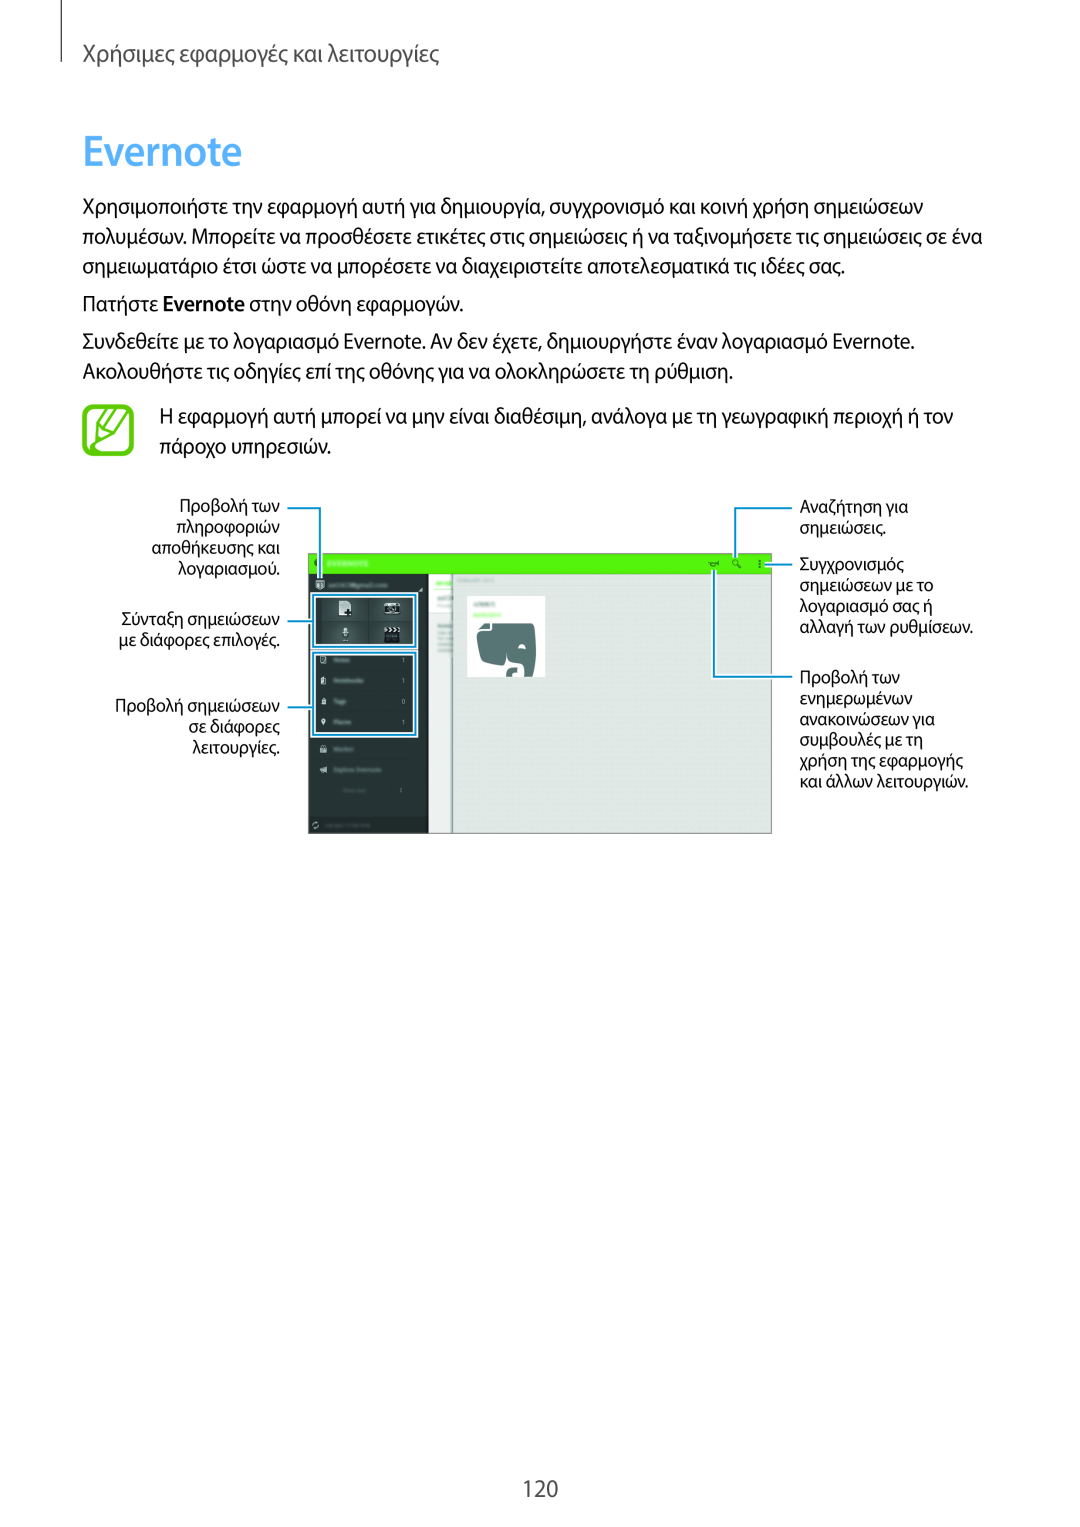 Samsung SM-T805NTSAEUR Evernote, Χρήσιμες εφαρμογές και λειτουργίες, Προβολή των πληροφοριών, Αναζήτηση για σημειώσεις 